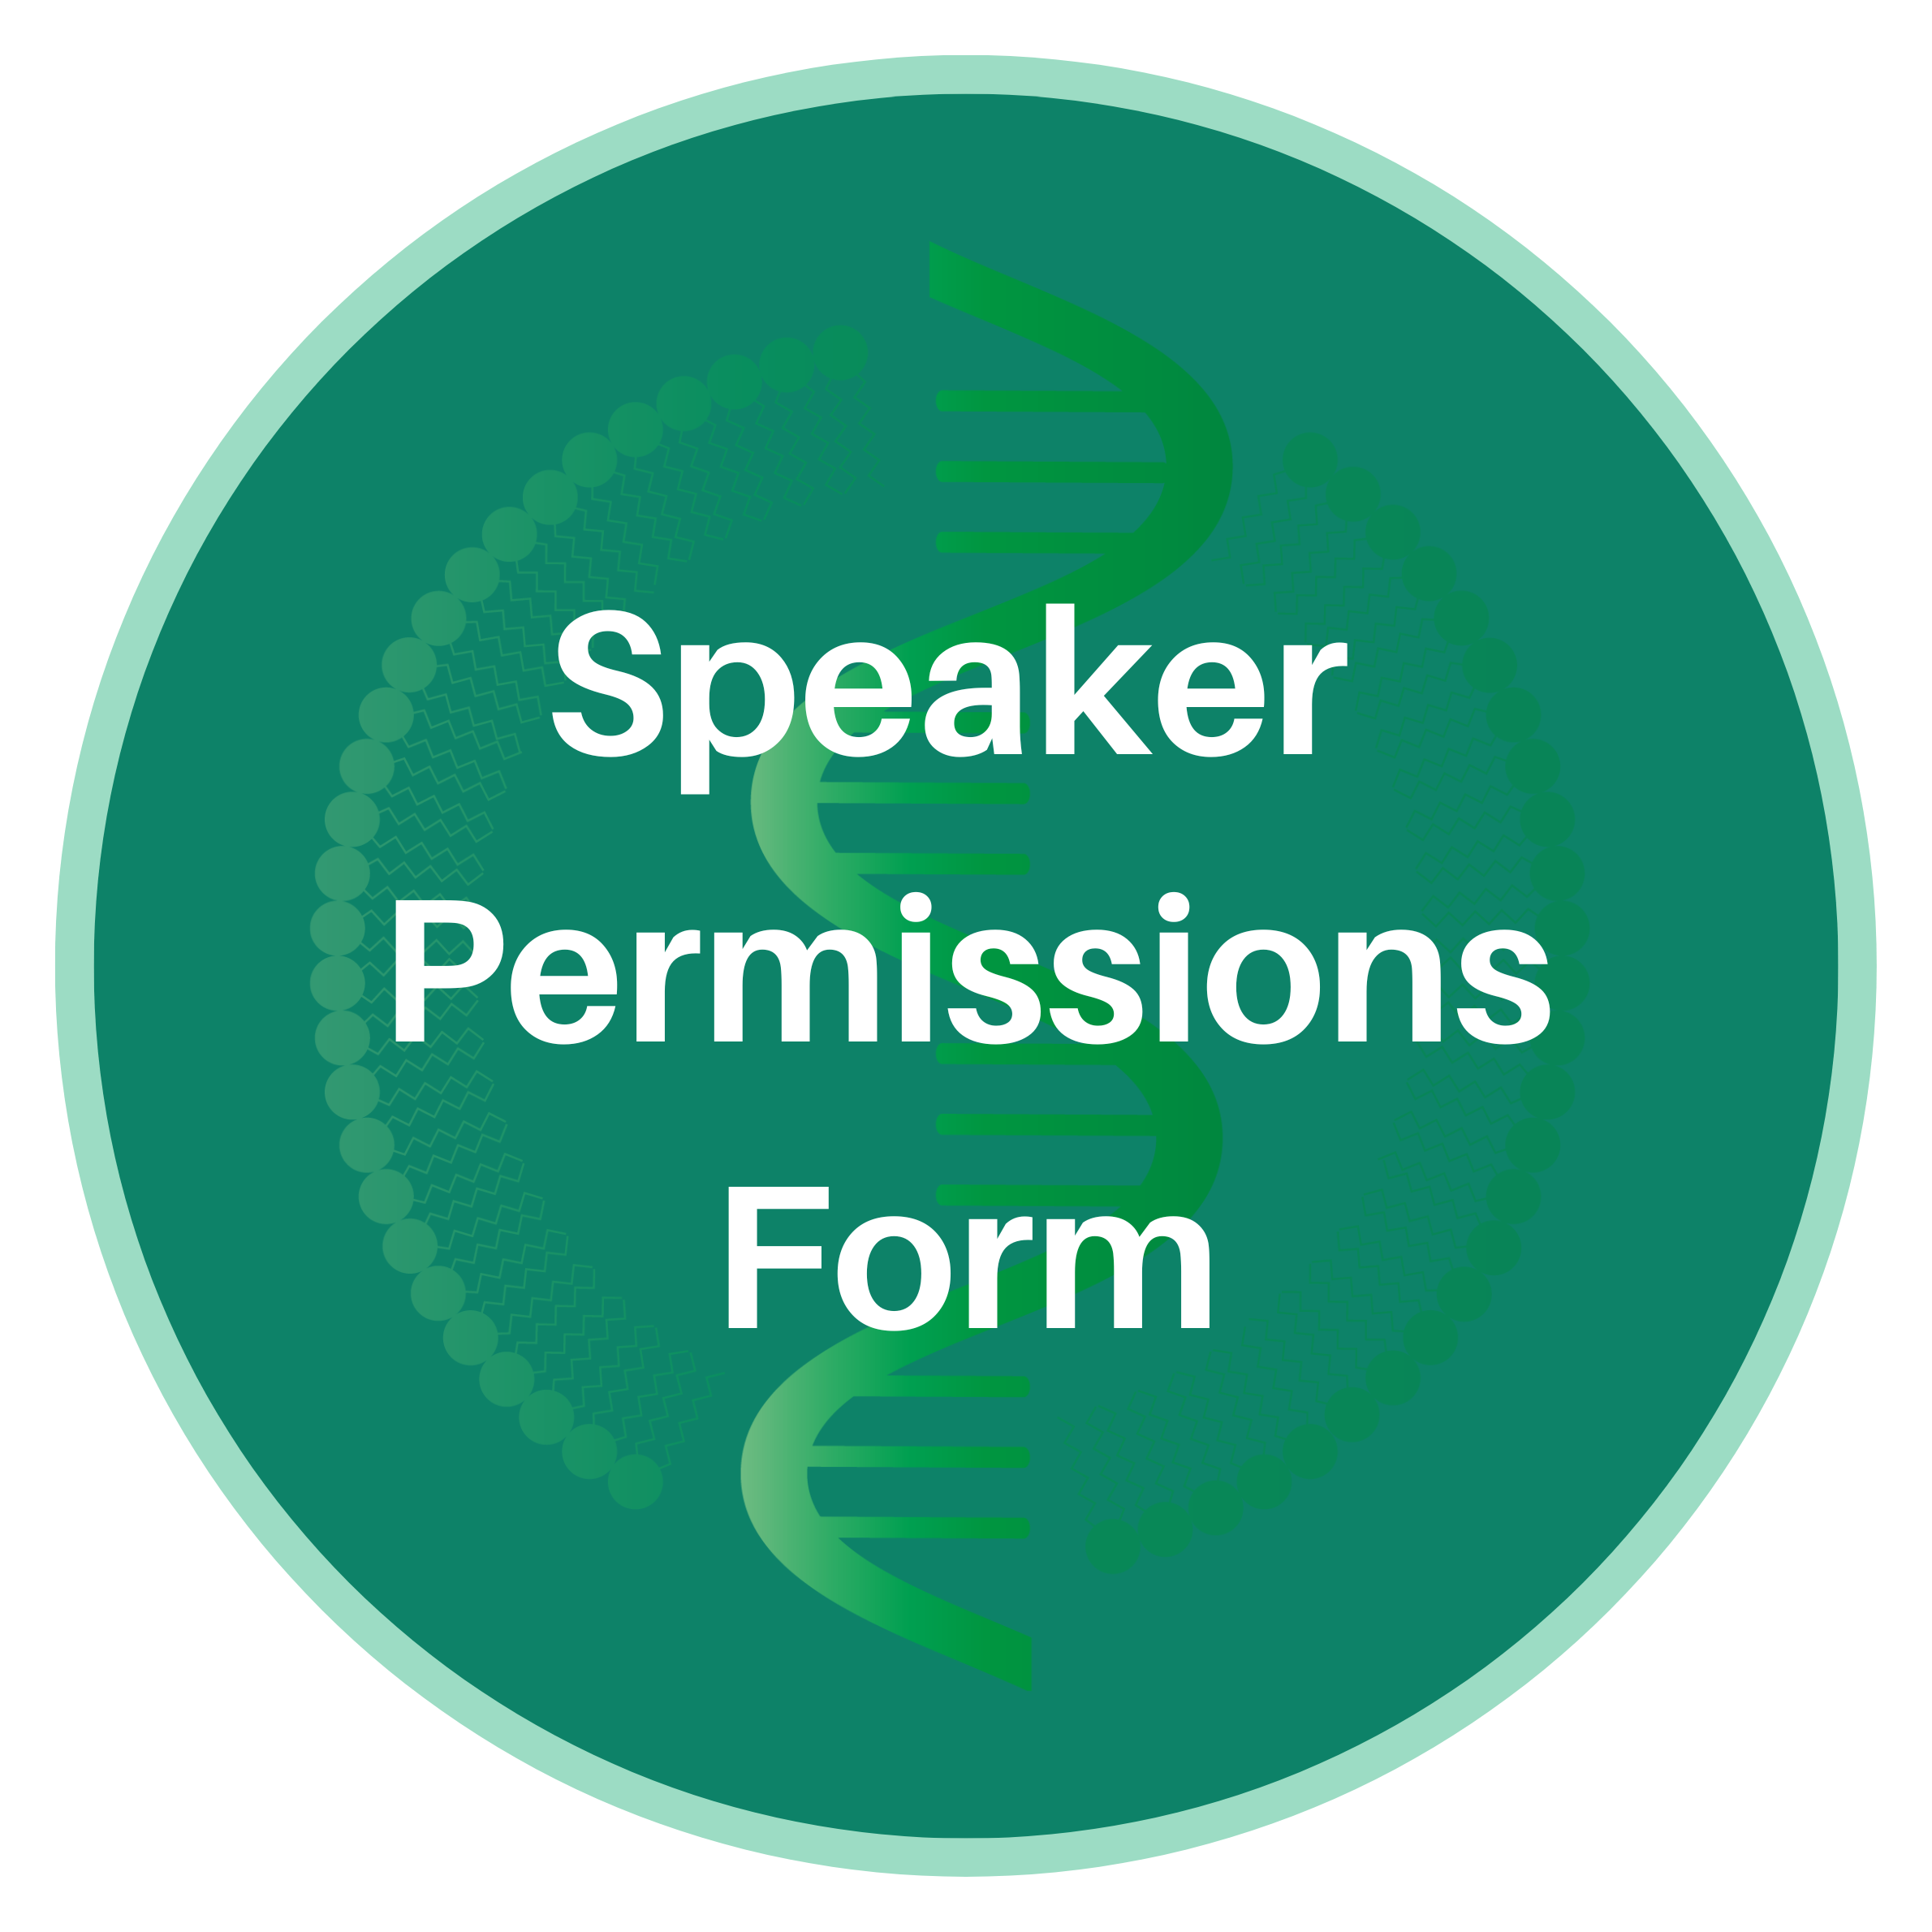 Speaker Permissions Form Button